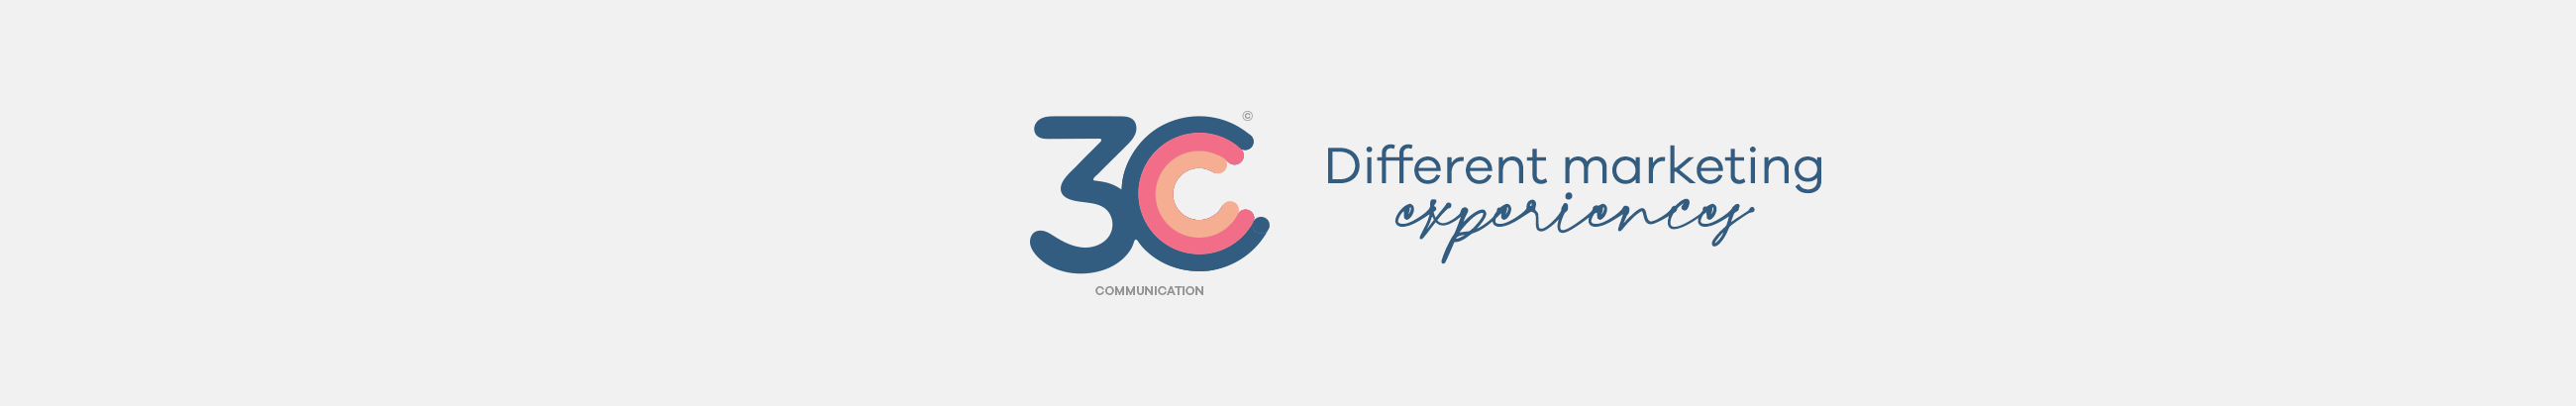 3C Communication Agency's profile banner